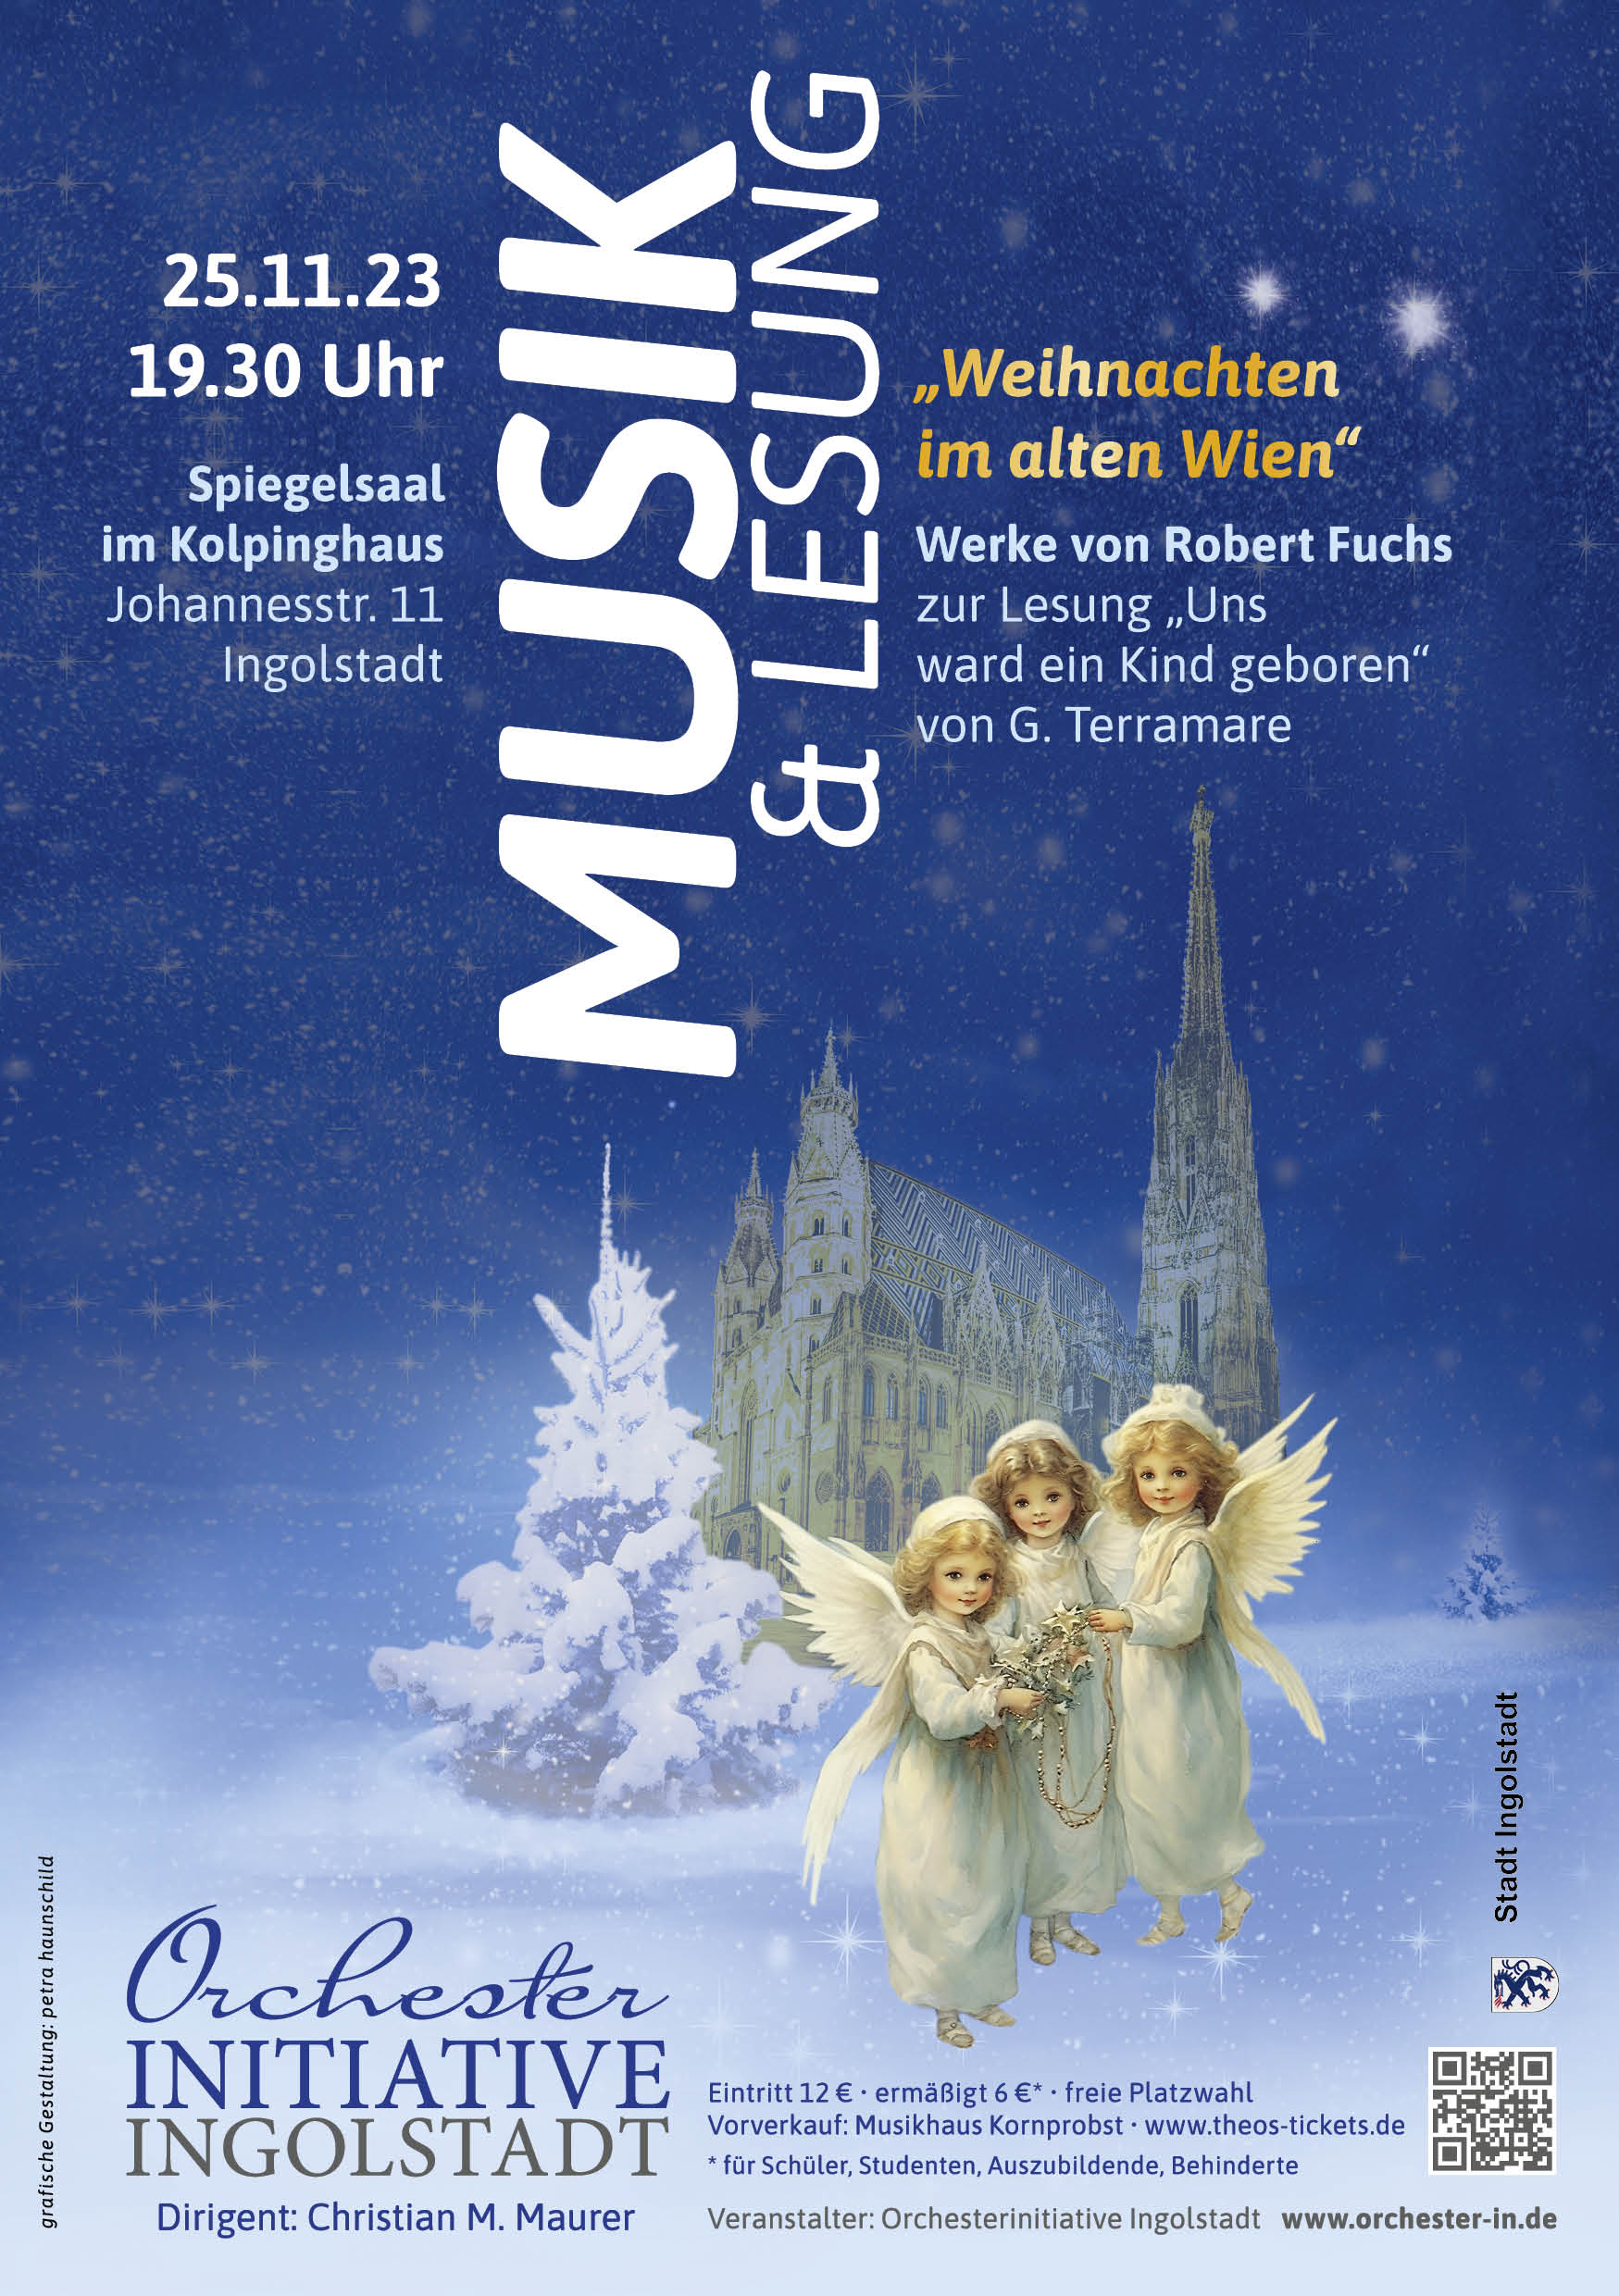 Konzert Orchesterinitiative Ingolstadt am 25.11.23